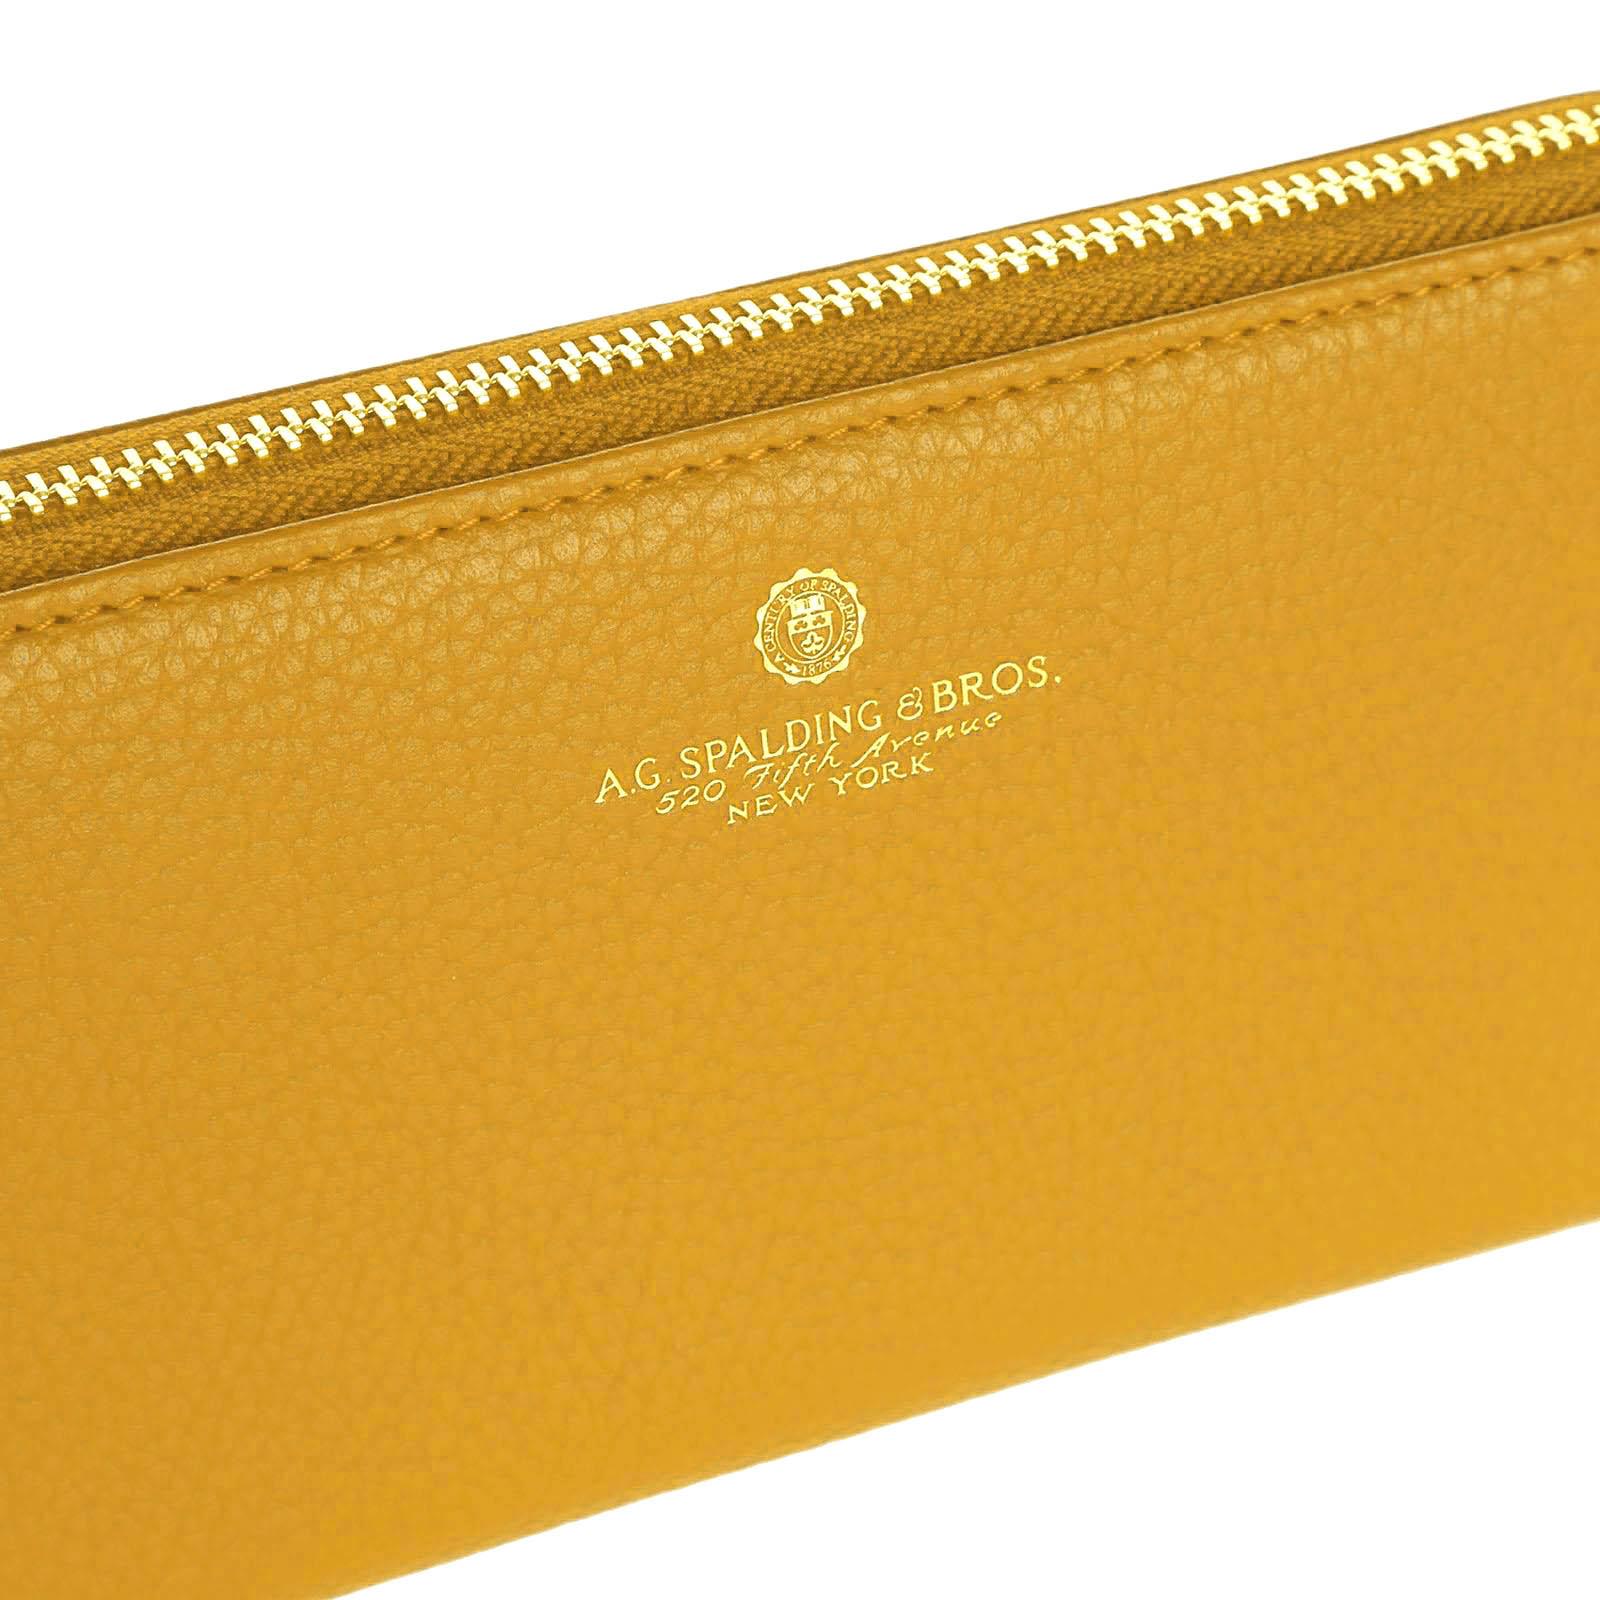 Woman Zipped Wallet Tiffany Yellow A.G.Spalding&Bros